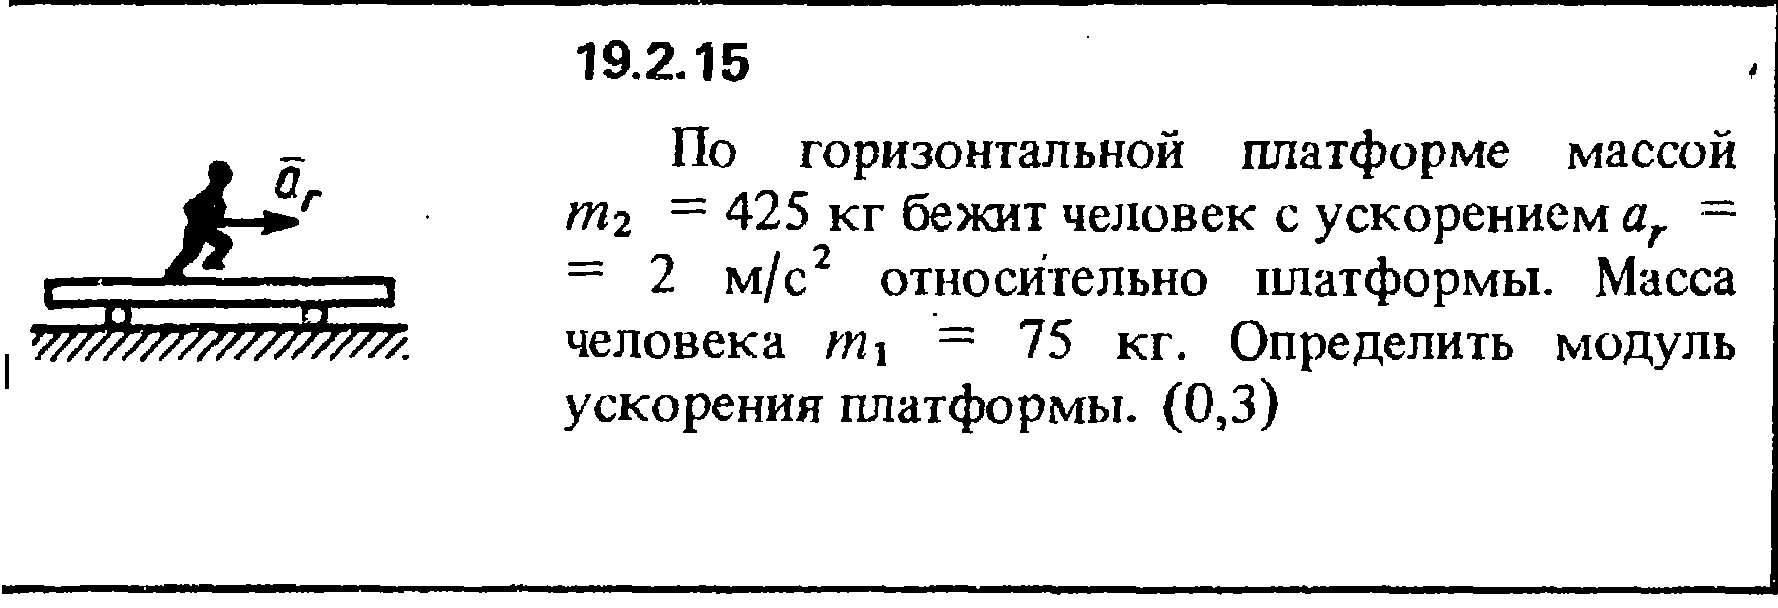 Решение 19.2.15 из сборника (решебника) Кепе О.Е. 1989